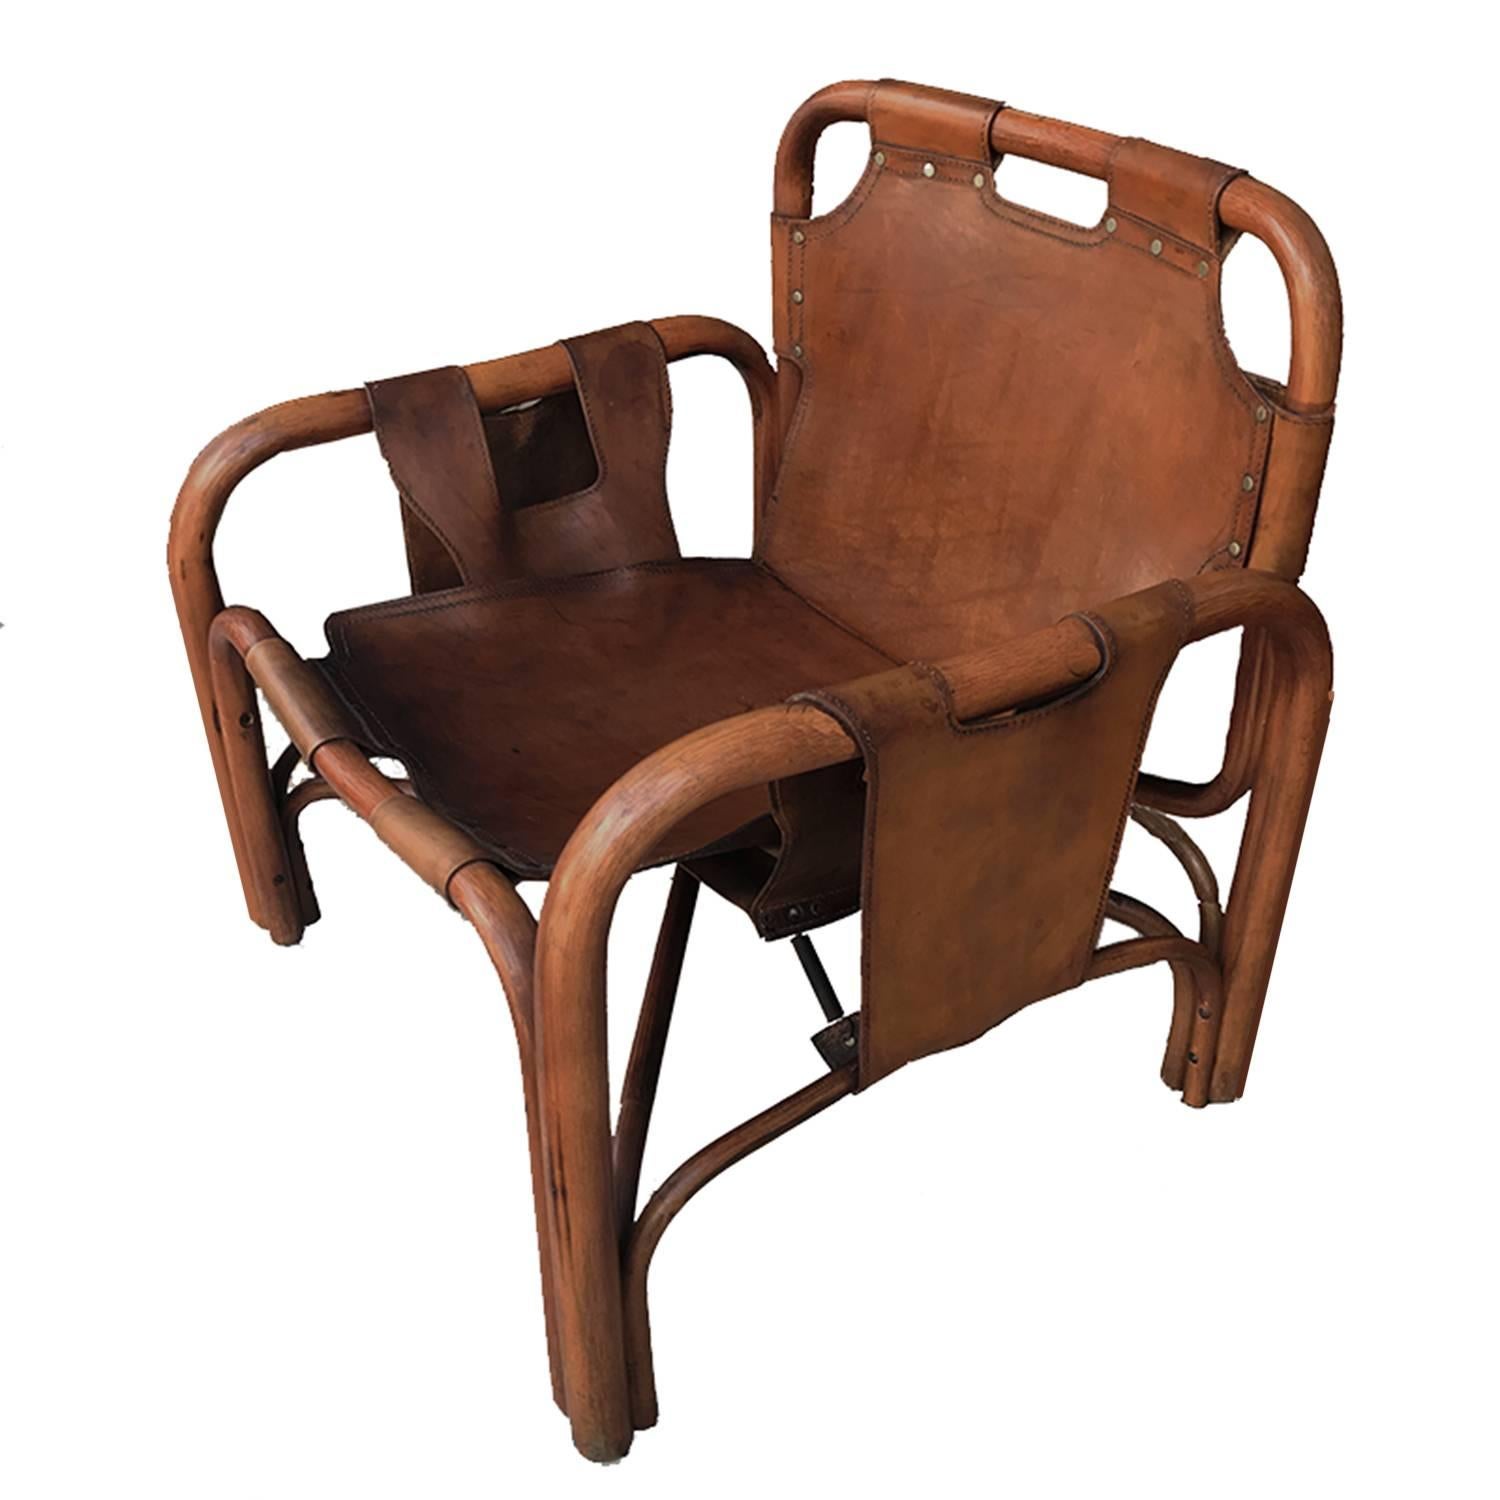 Italian Mid-Century Modern Bamboo and Leather Lounge Chair by Bonacina 1